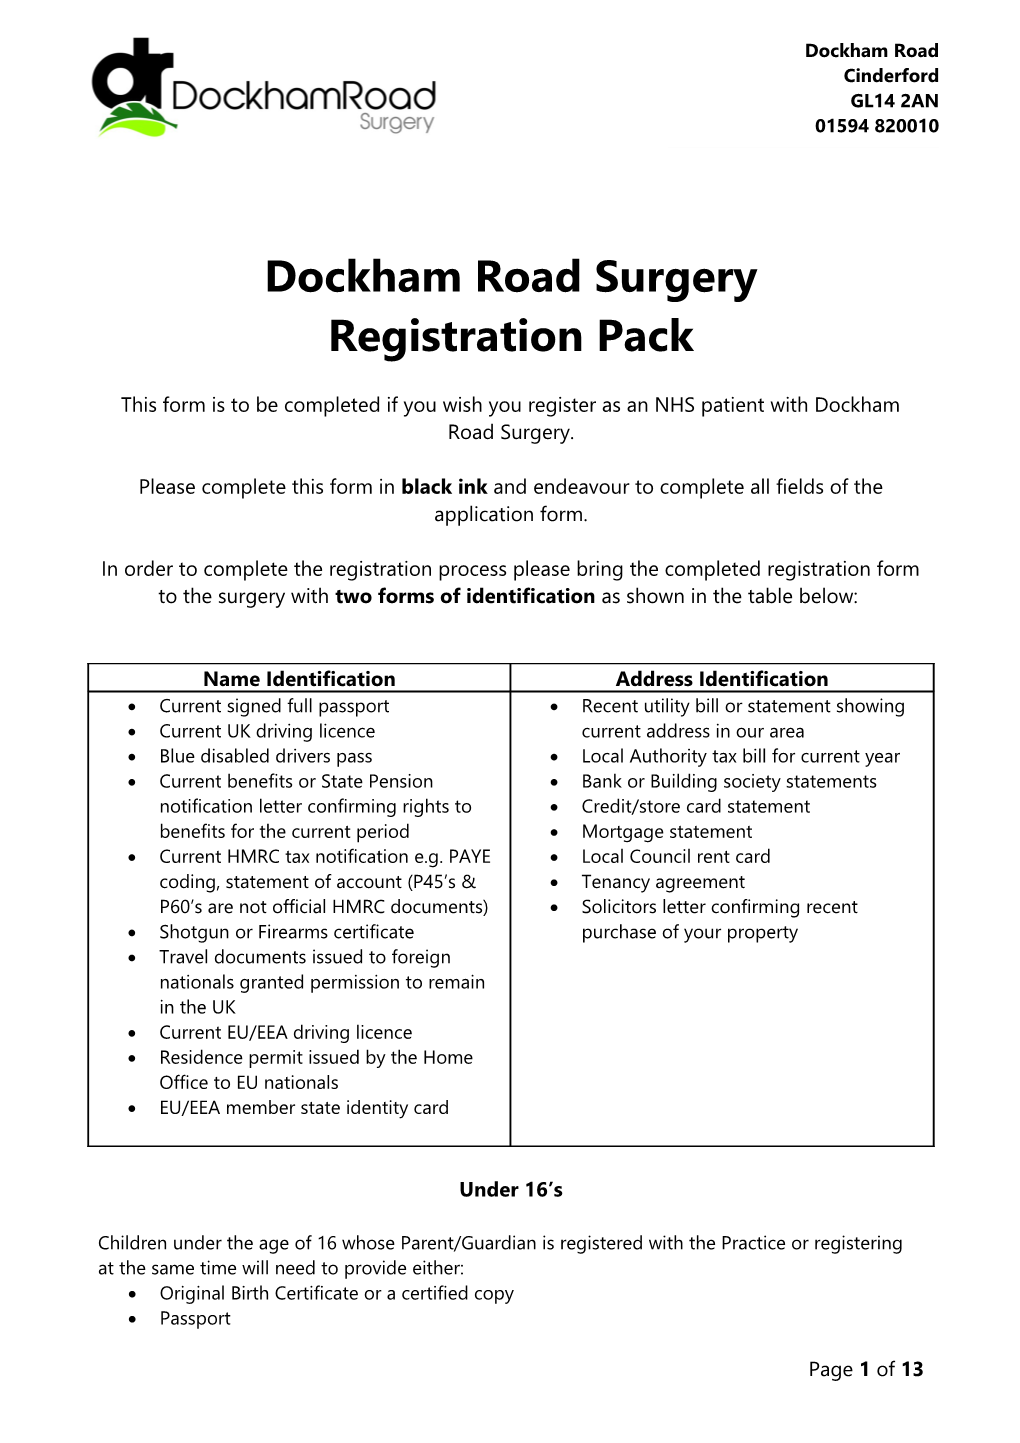 Dockham Road Surgery